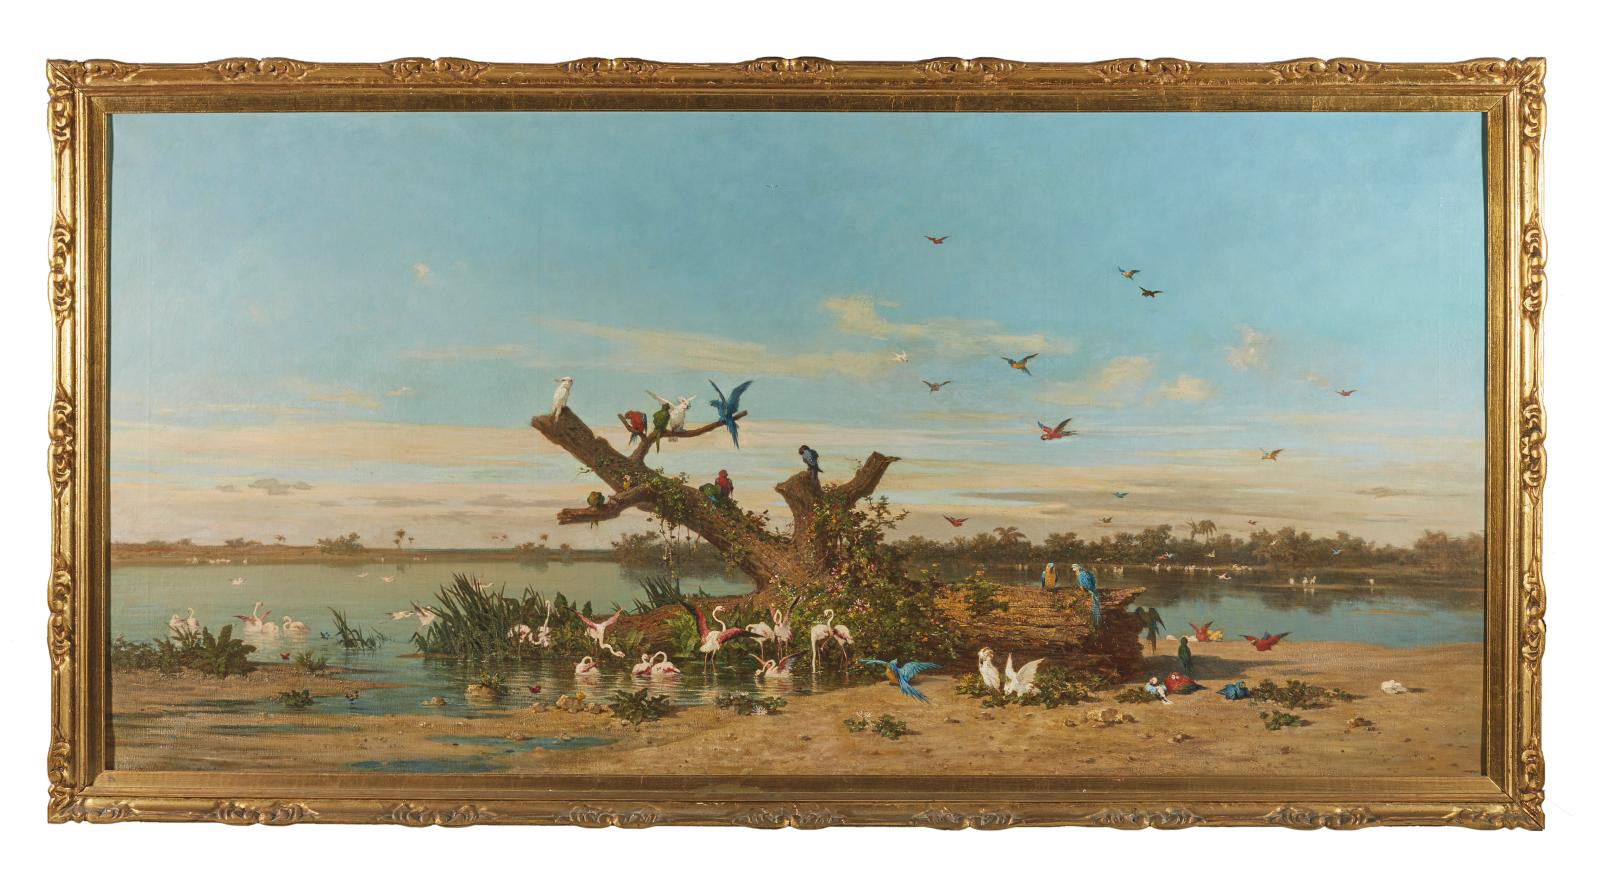 A Bird Paradise by Orientalist Painter Charles de Tournemine